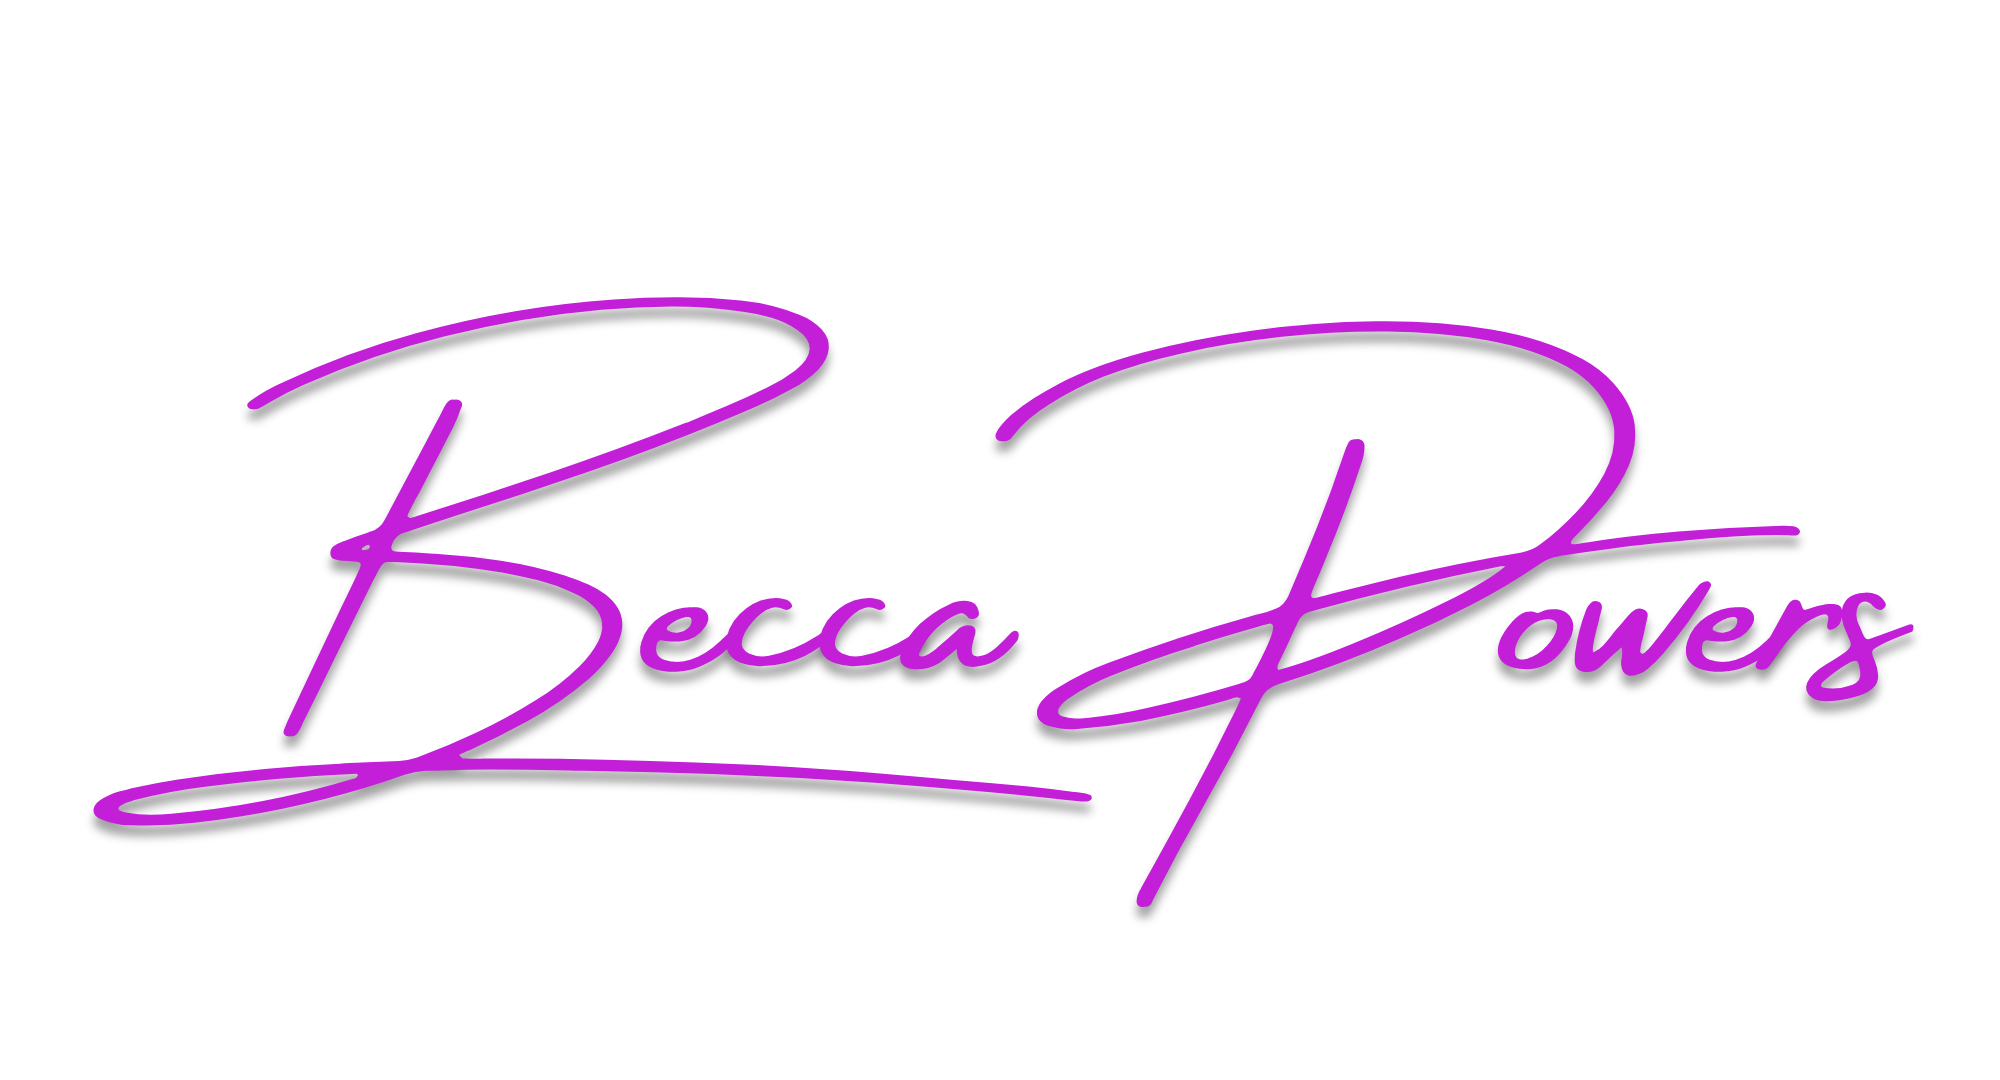 Becca Powers  logo